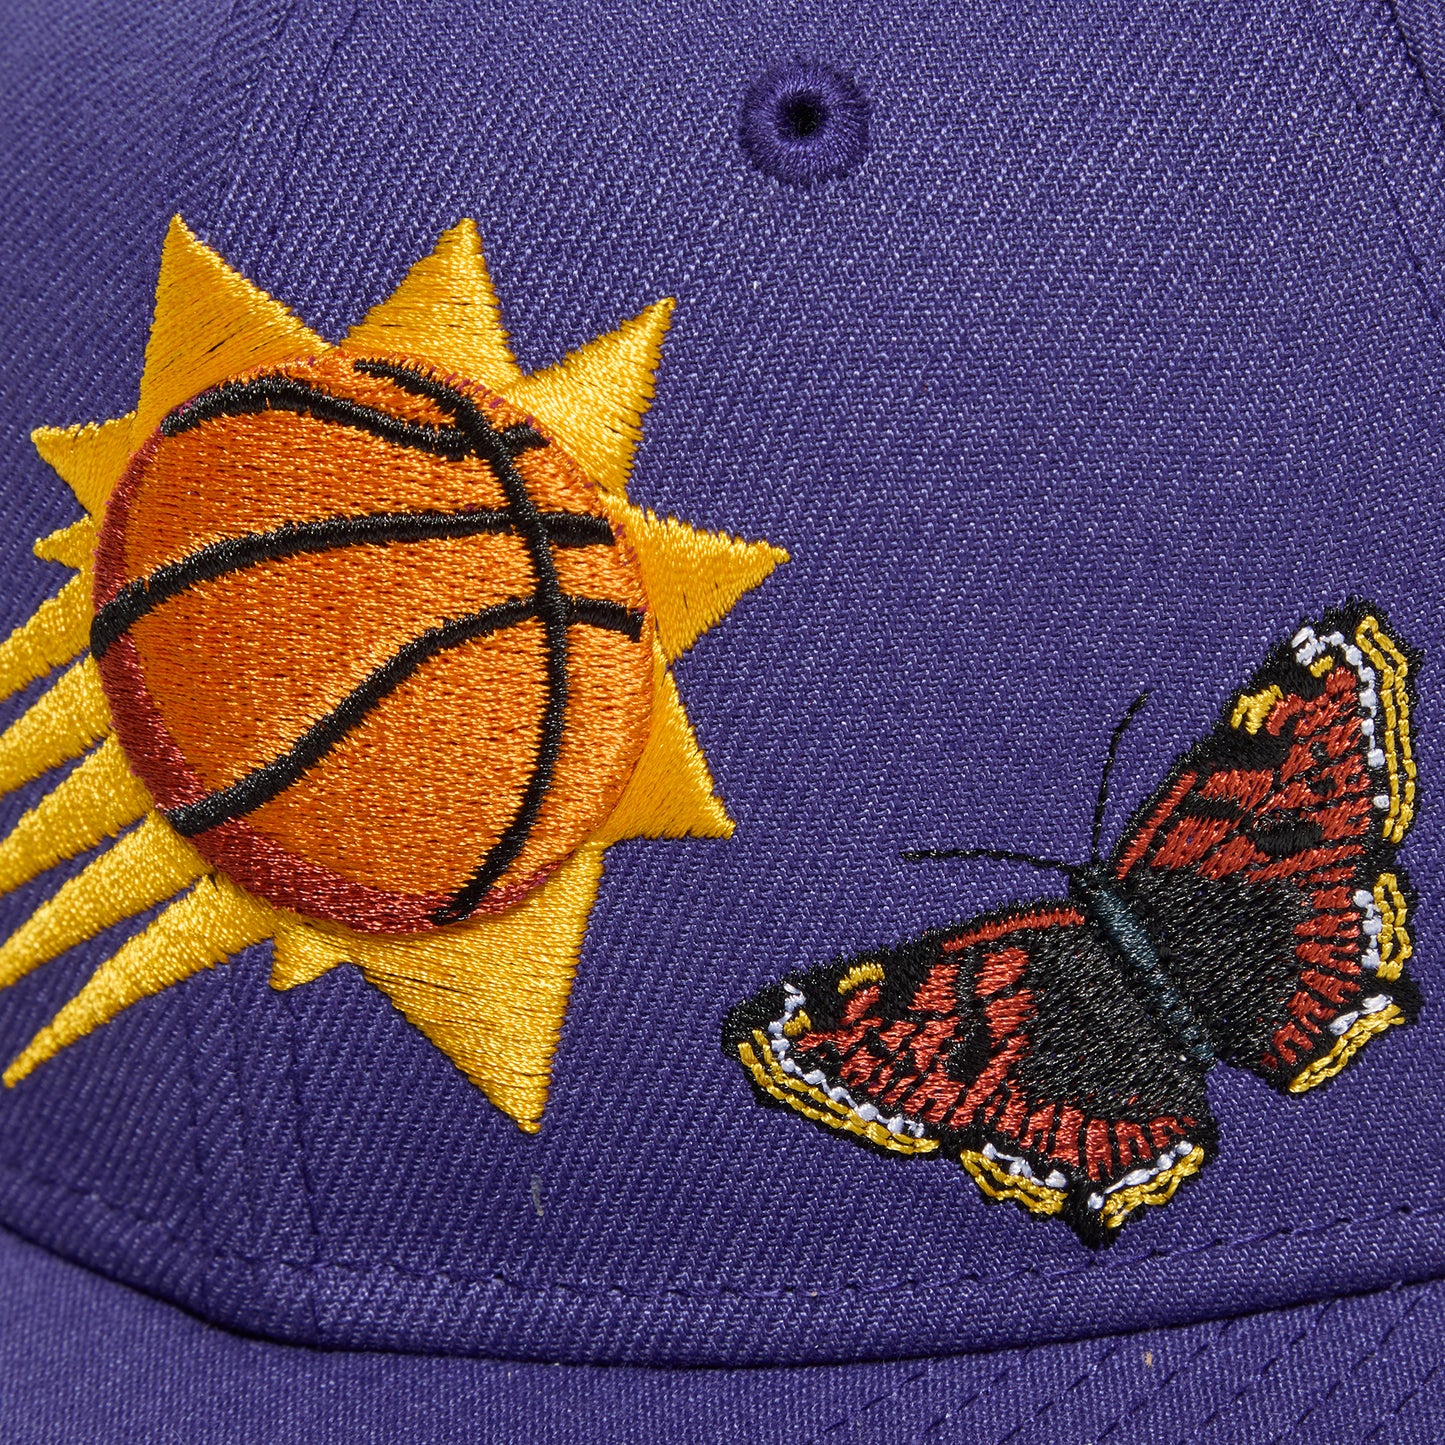 New Era x NBA Phoenix Suns Felt 59ifty Fitted Hat (Purple)